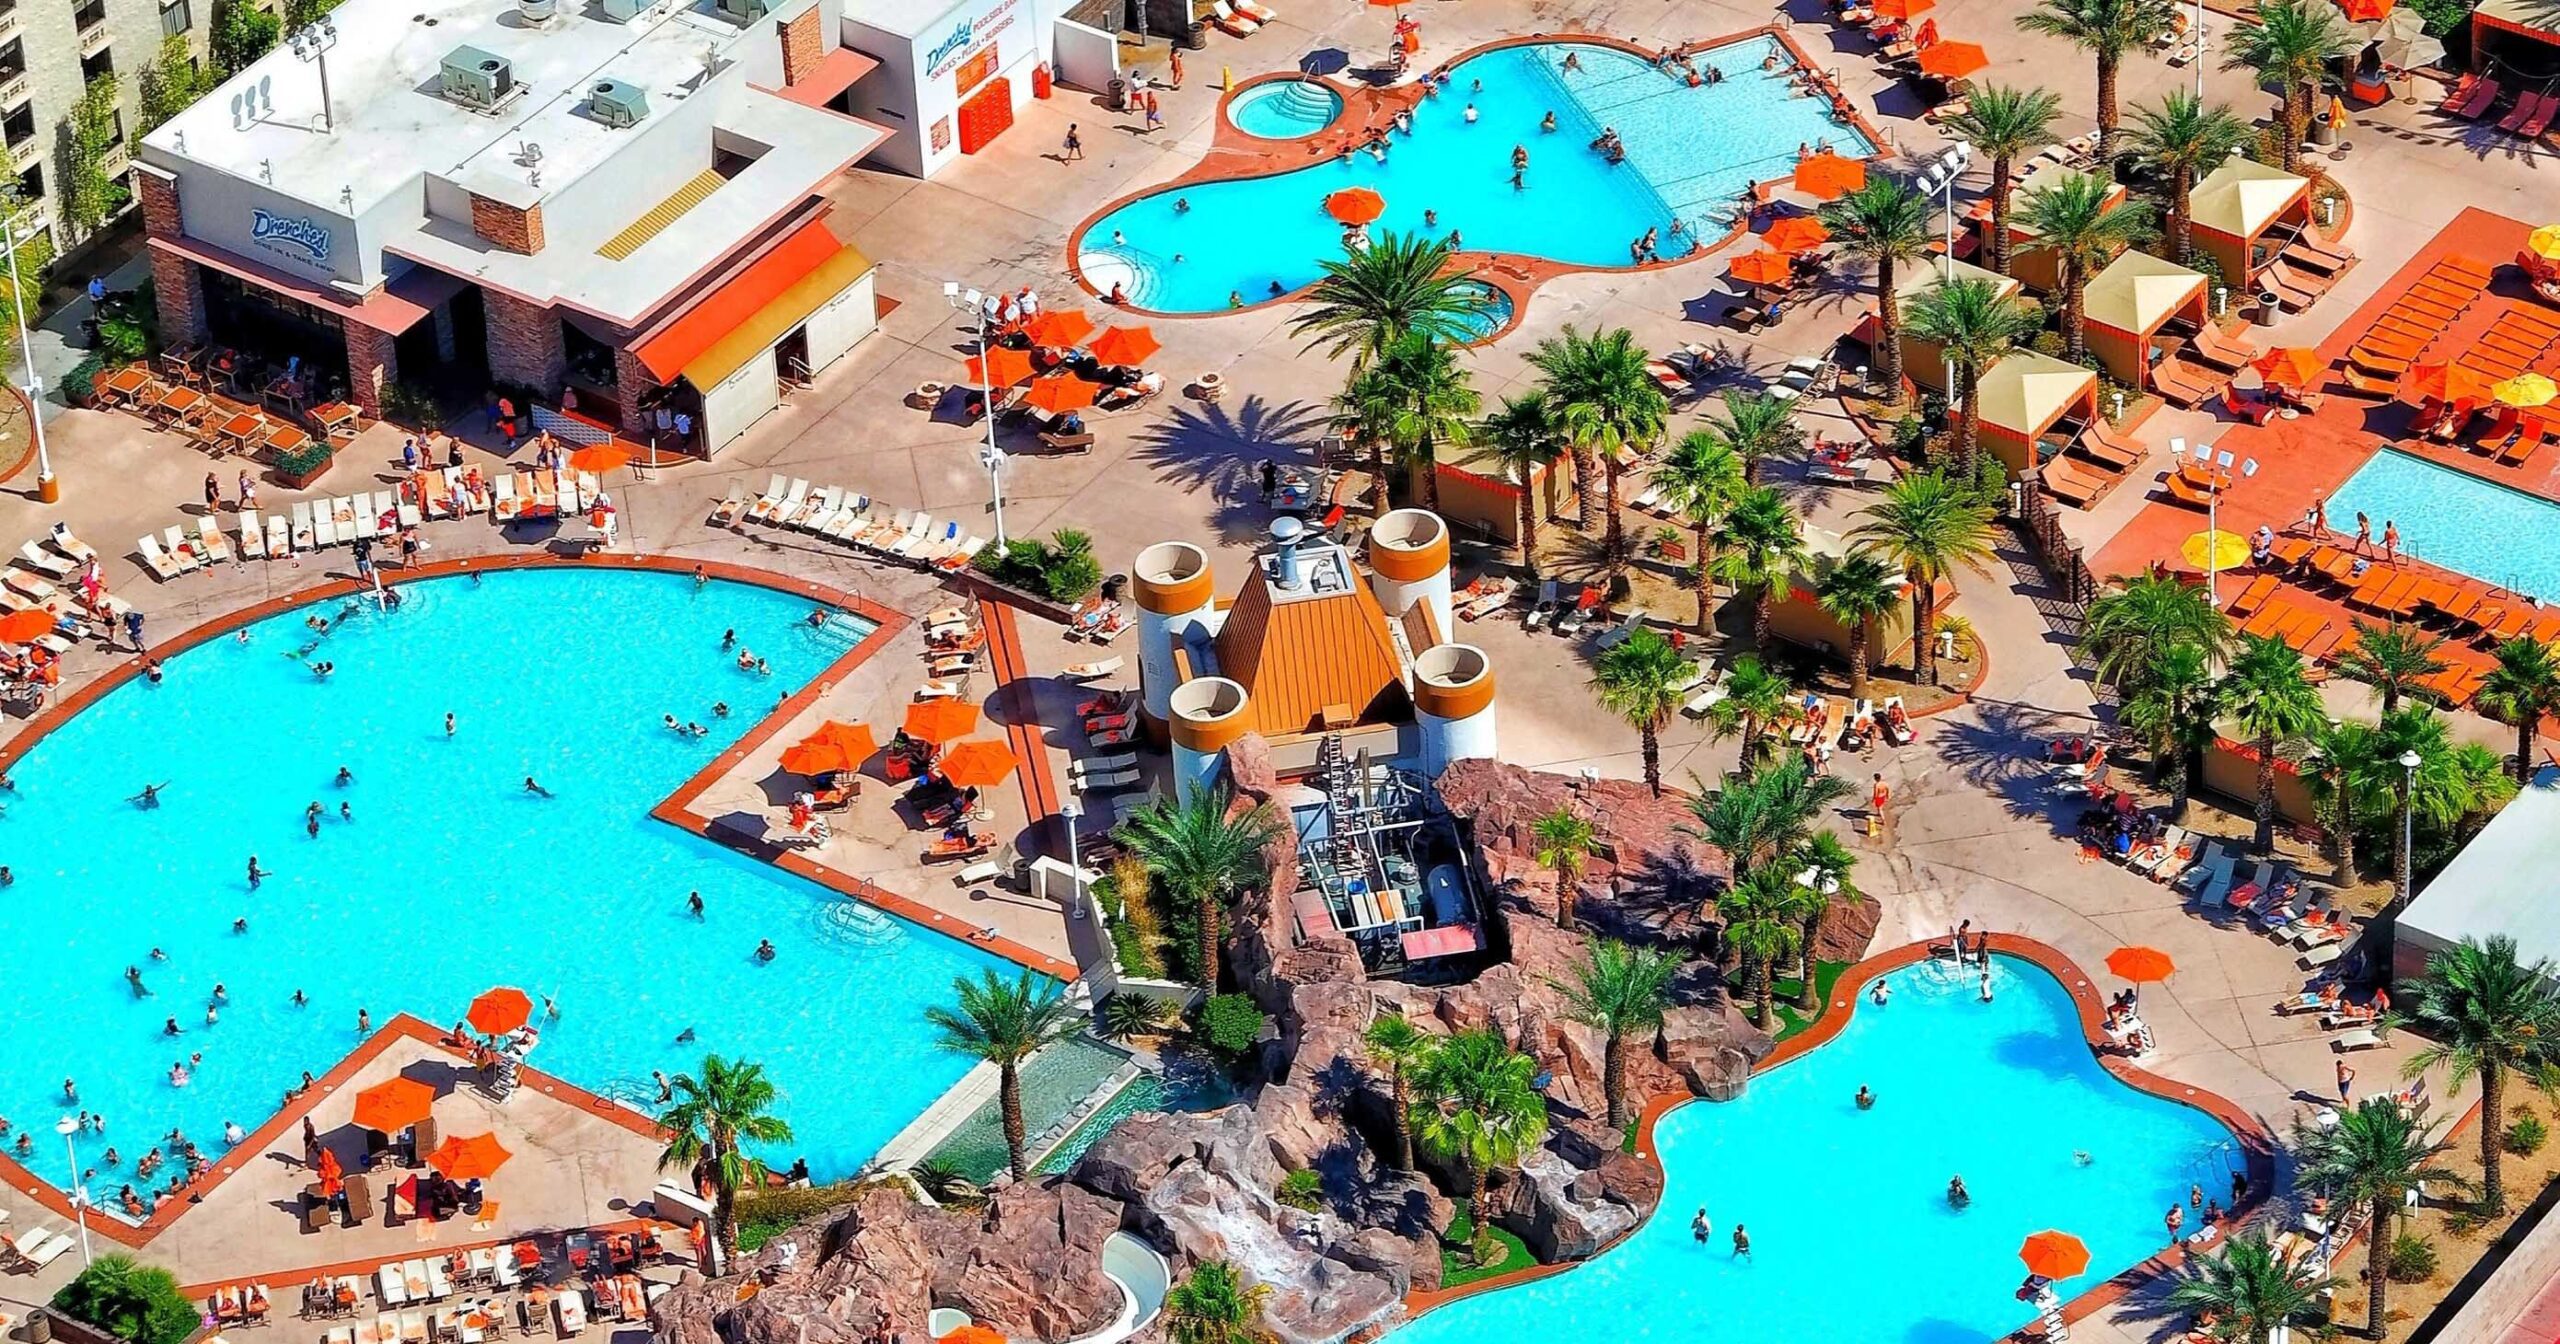 Excalibur pool Las Vegas Hotels